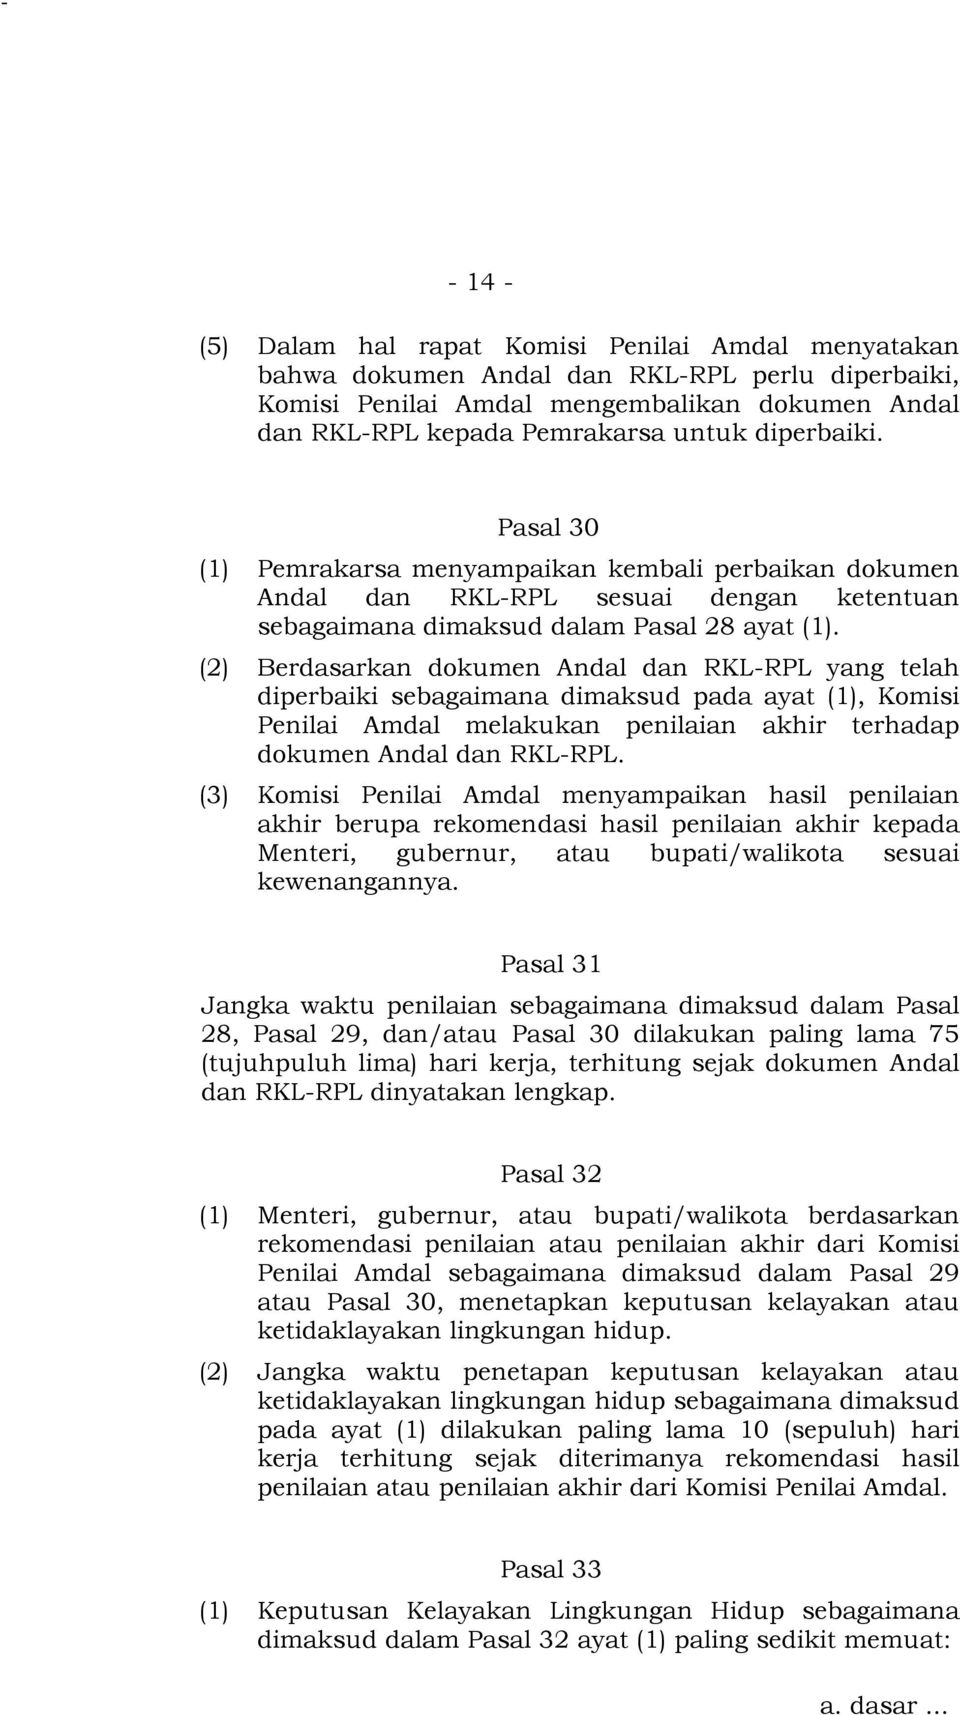 (2) Berdasarkan dokumen Andal dan RKL-RPL yang telah diperbaiki sebagaimana dimaksud pada ayat (1), Komisi Penilai Amdal melakukan penilaian akhir terhadap dokumen Andal dan RKL-RPL.